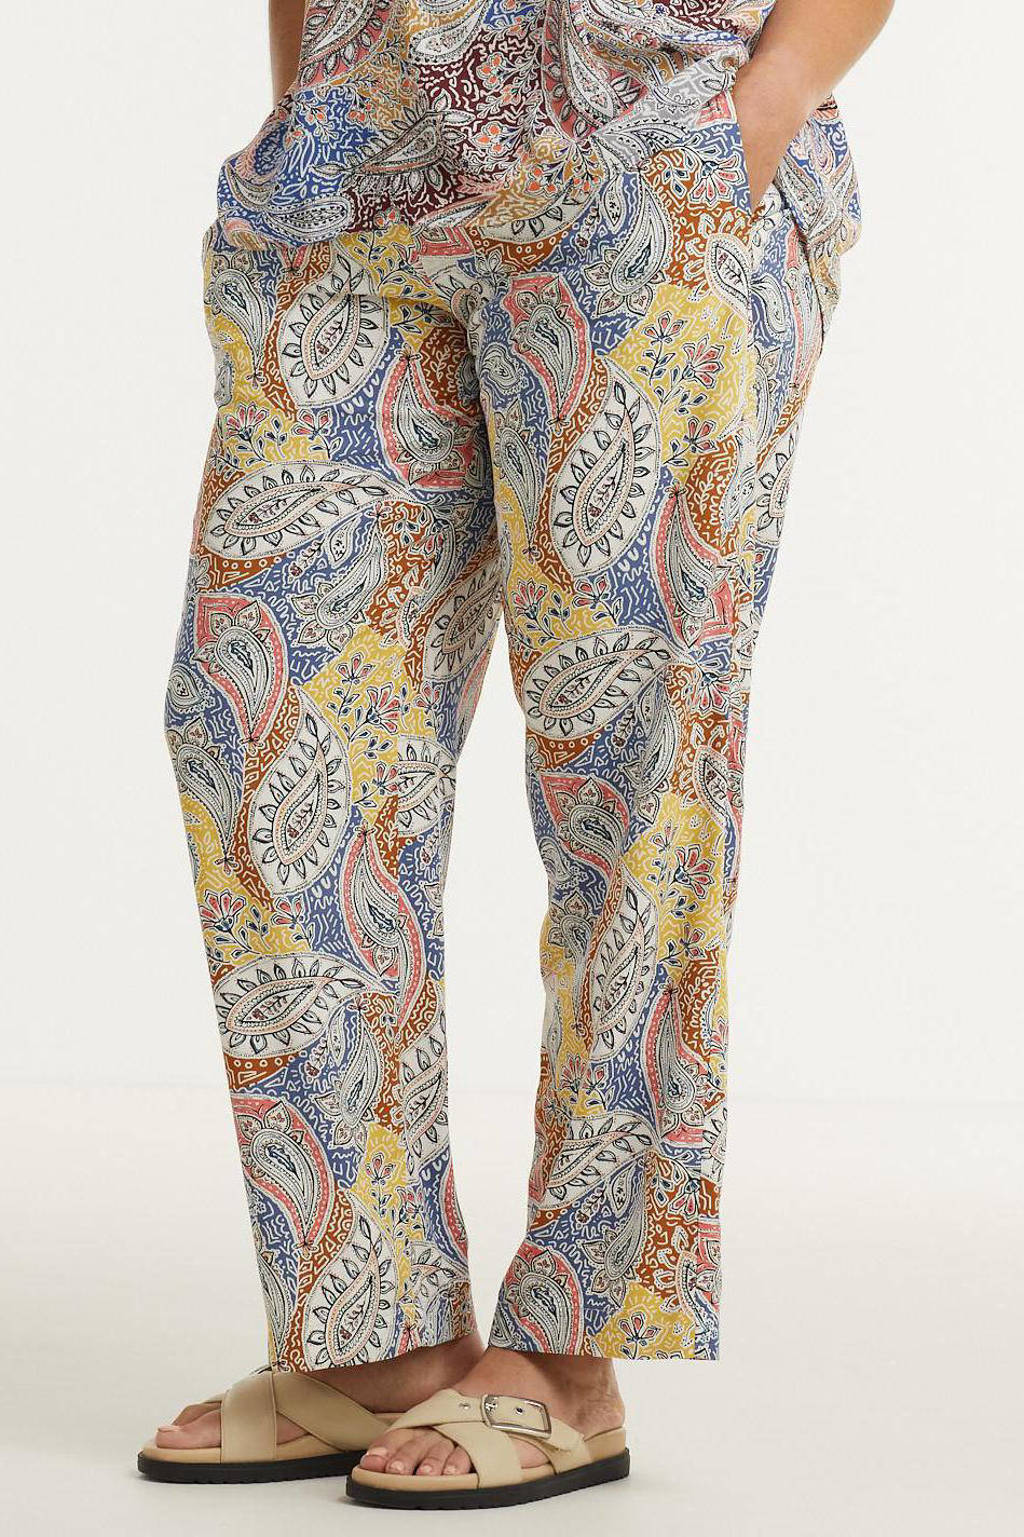 ESPRIT Curvy straight fit pantalon met paisleyprint geel/blauw/rood, Geel/blauw/rood